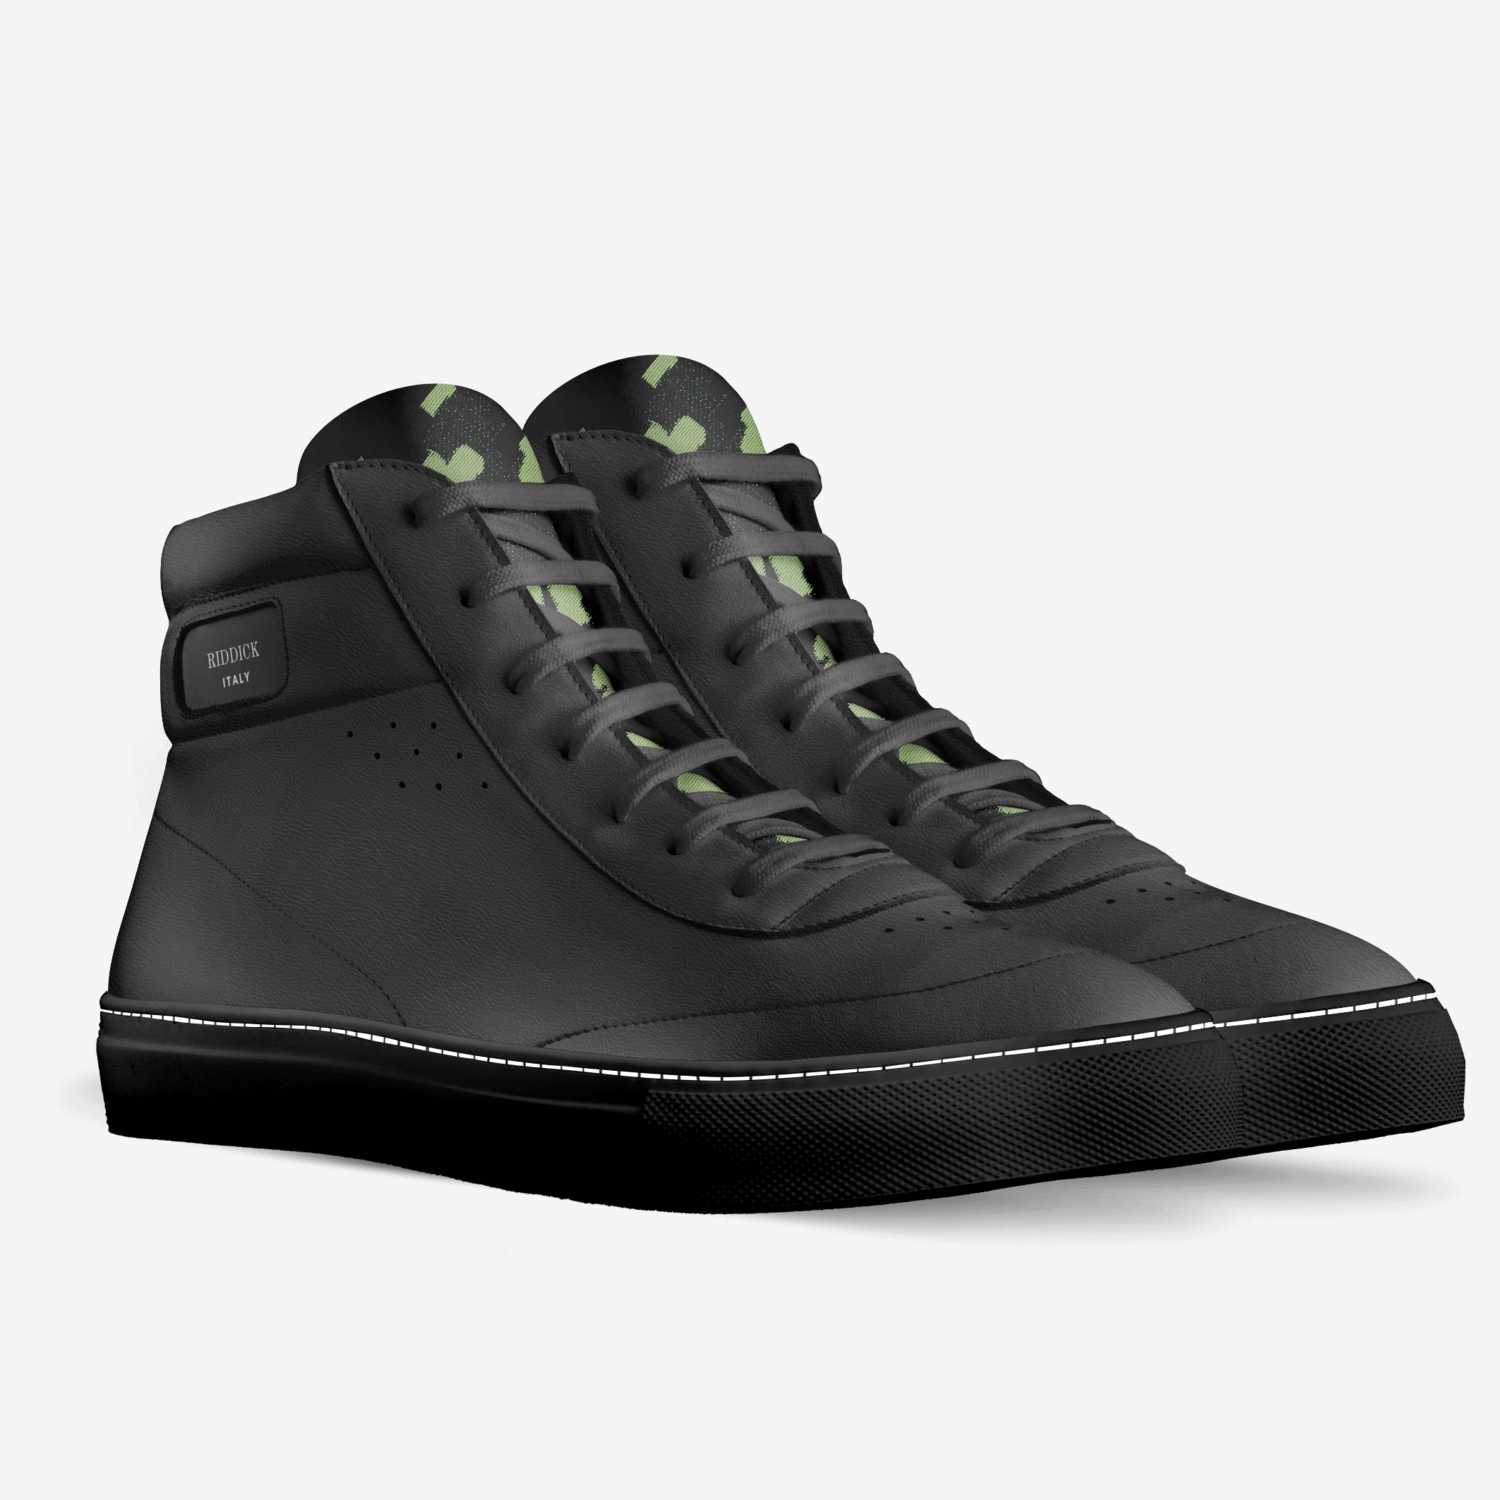 BLACK-LIST [UNISEX] - Riddick Shoes Shoe Riddick Shoes   